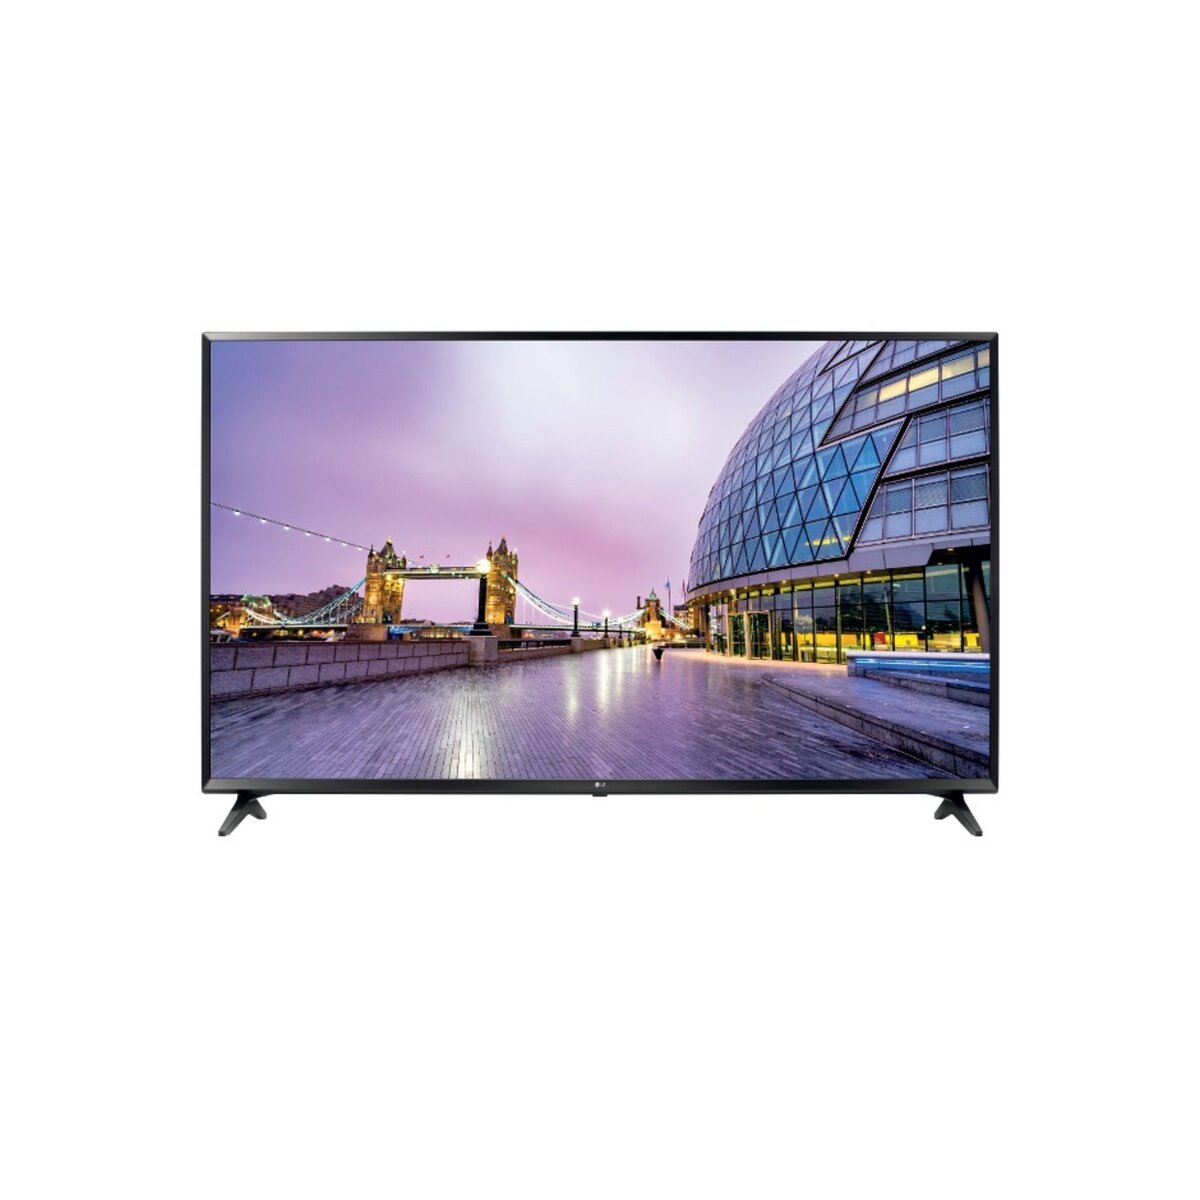 LG 43UJ630V - TV - LED - 4K UHD - 43"/108 cm - Smart TV - HDR